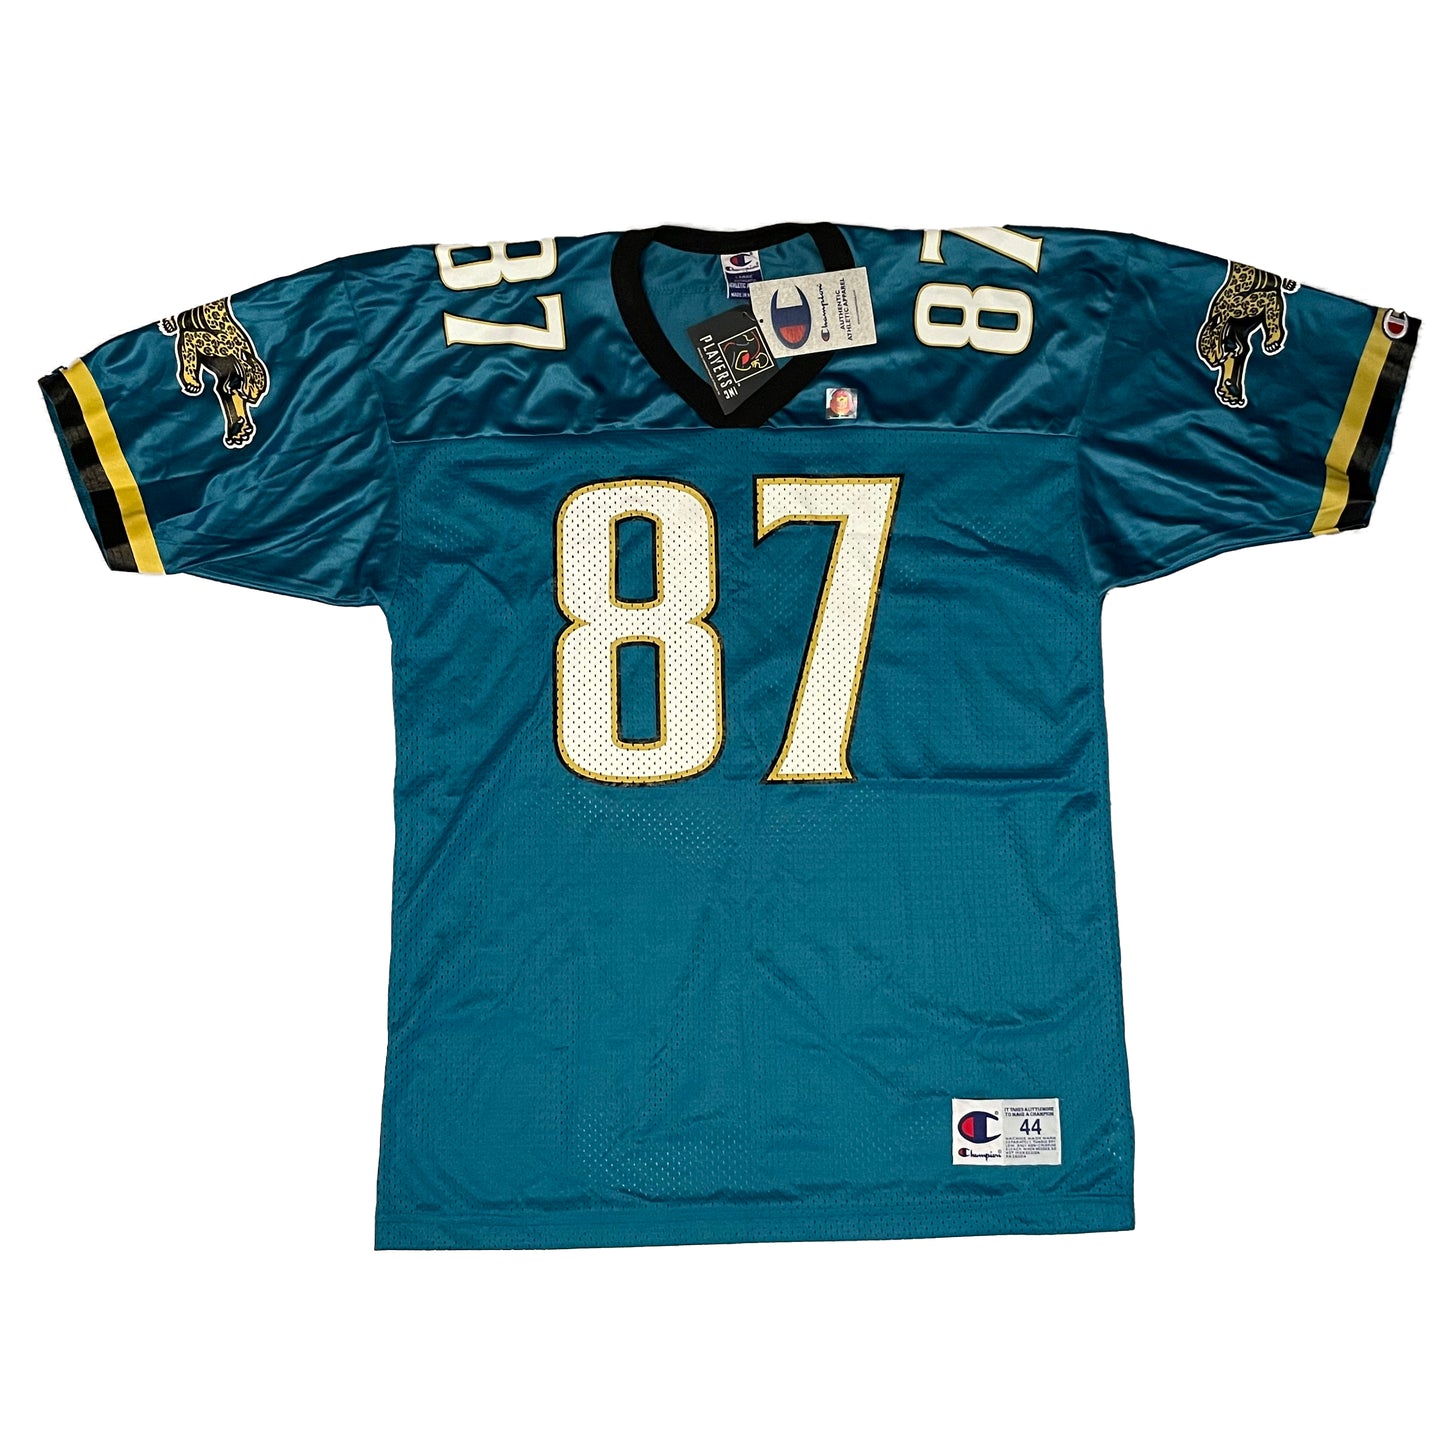 Jacksonville Jaguars DEADSTOCK Keenan McCardell jersey size LARGE